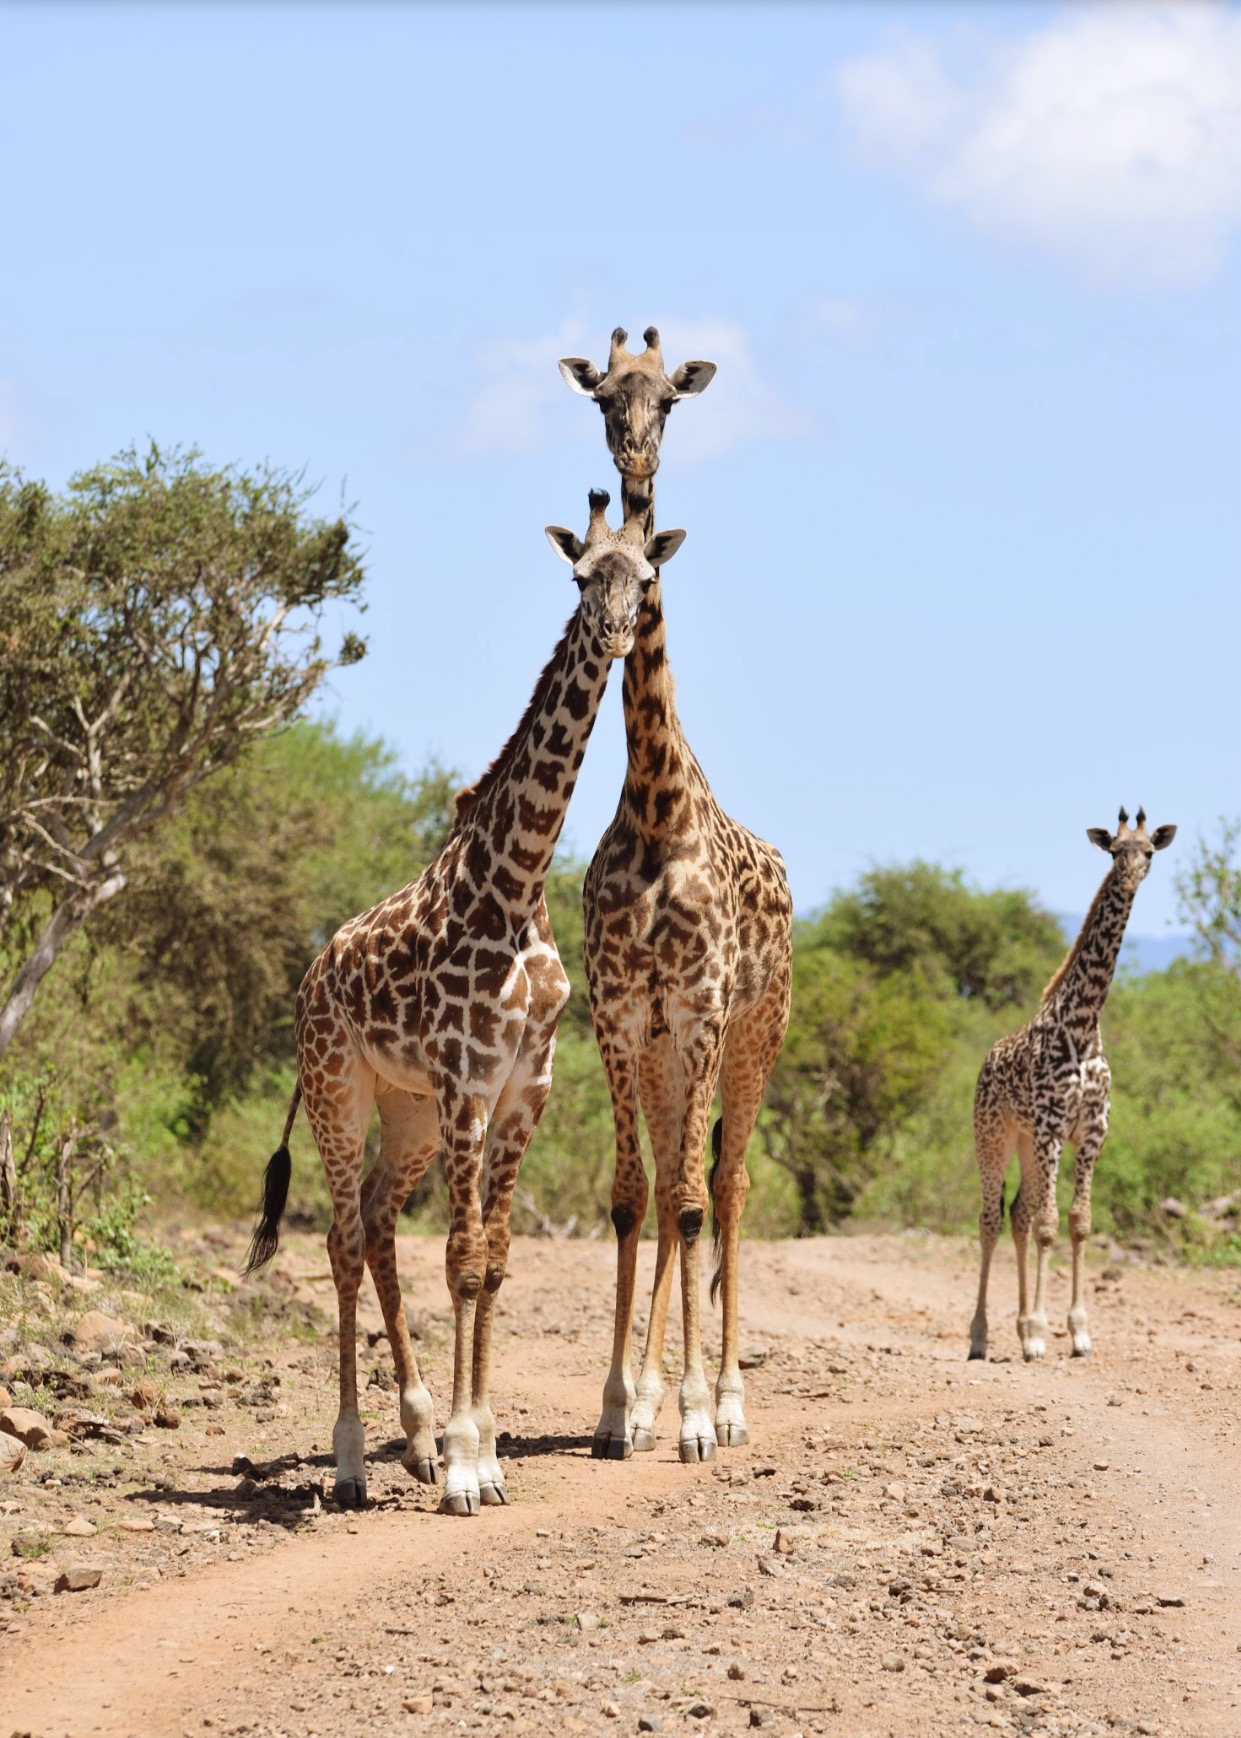  Our Stay At Finch Hattons Luxury Camp In Tsavo National Park, Kenya - Kenya Safari - Kenya Safari Tours - Safari Kenya - Safari Trips In Kenya - Trip To Kenya - Kenyan Safari - How To Plan A Safari - Kenya Safari Guide - Kenya Wildlife - Kenya Trip - Travel To Kenya - Guide To Kenya 